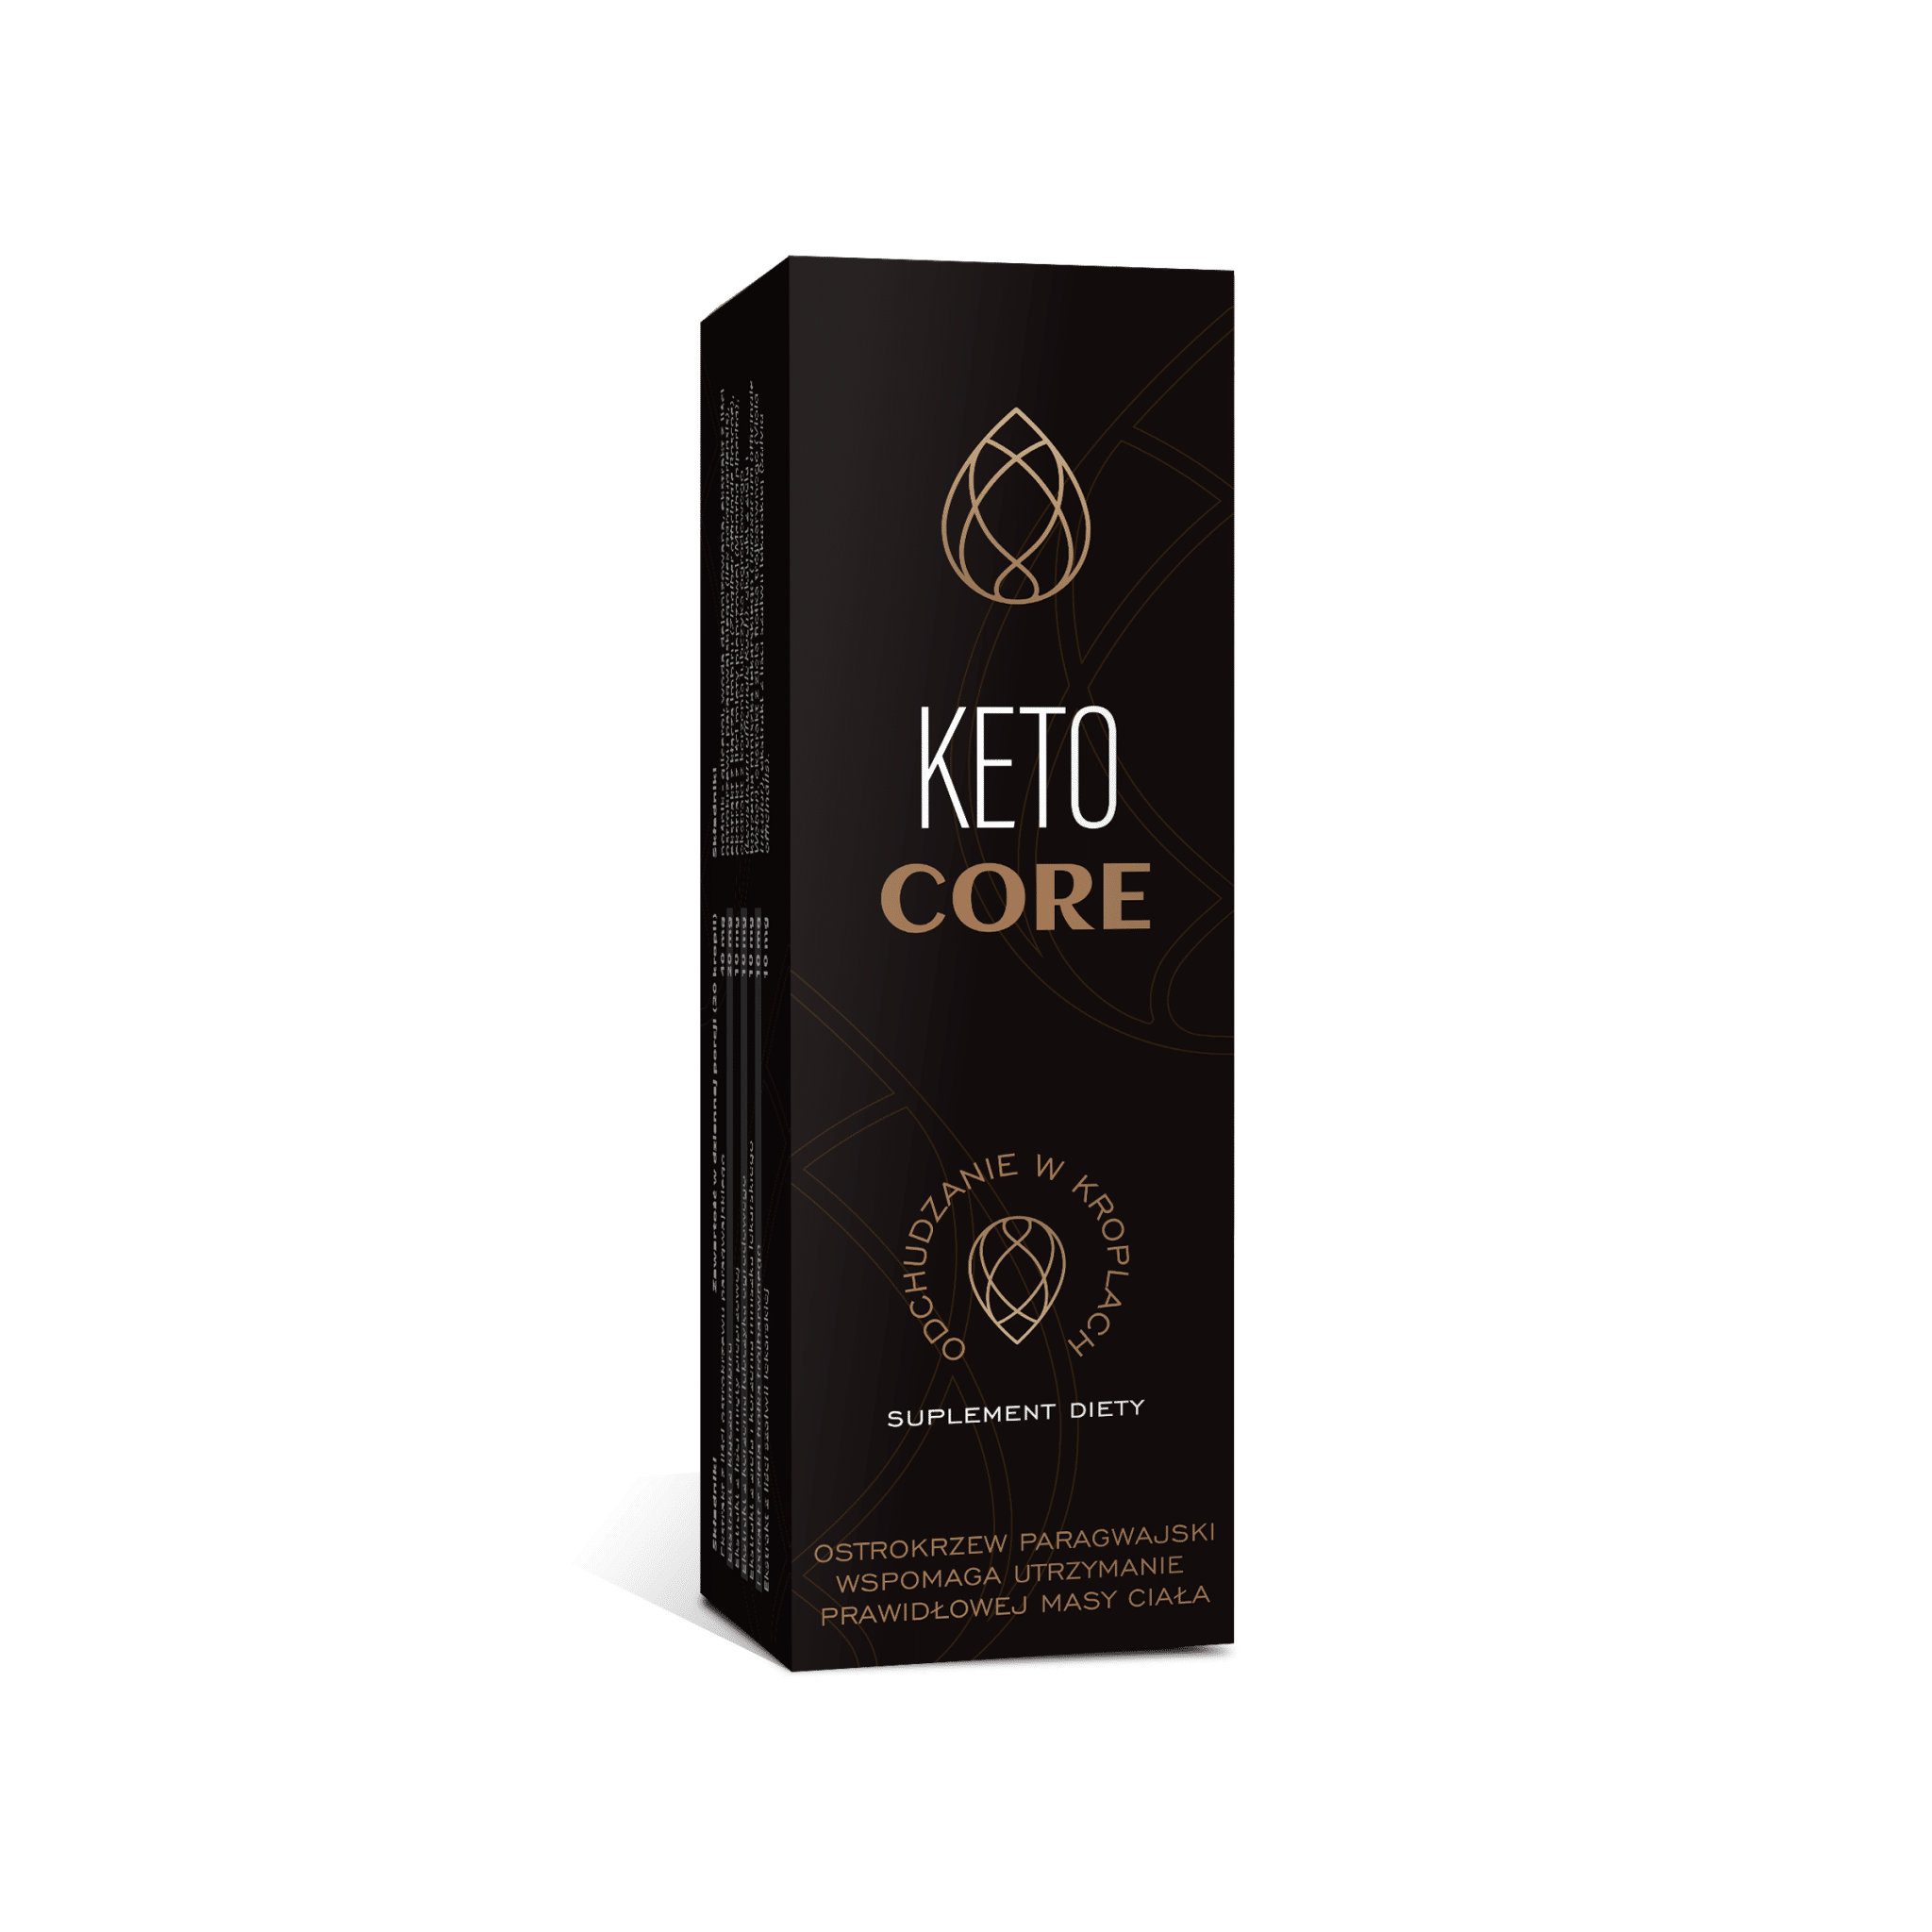 Keto Core มันคืออะไร?